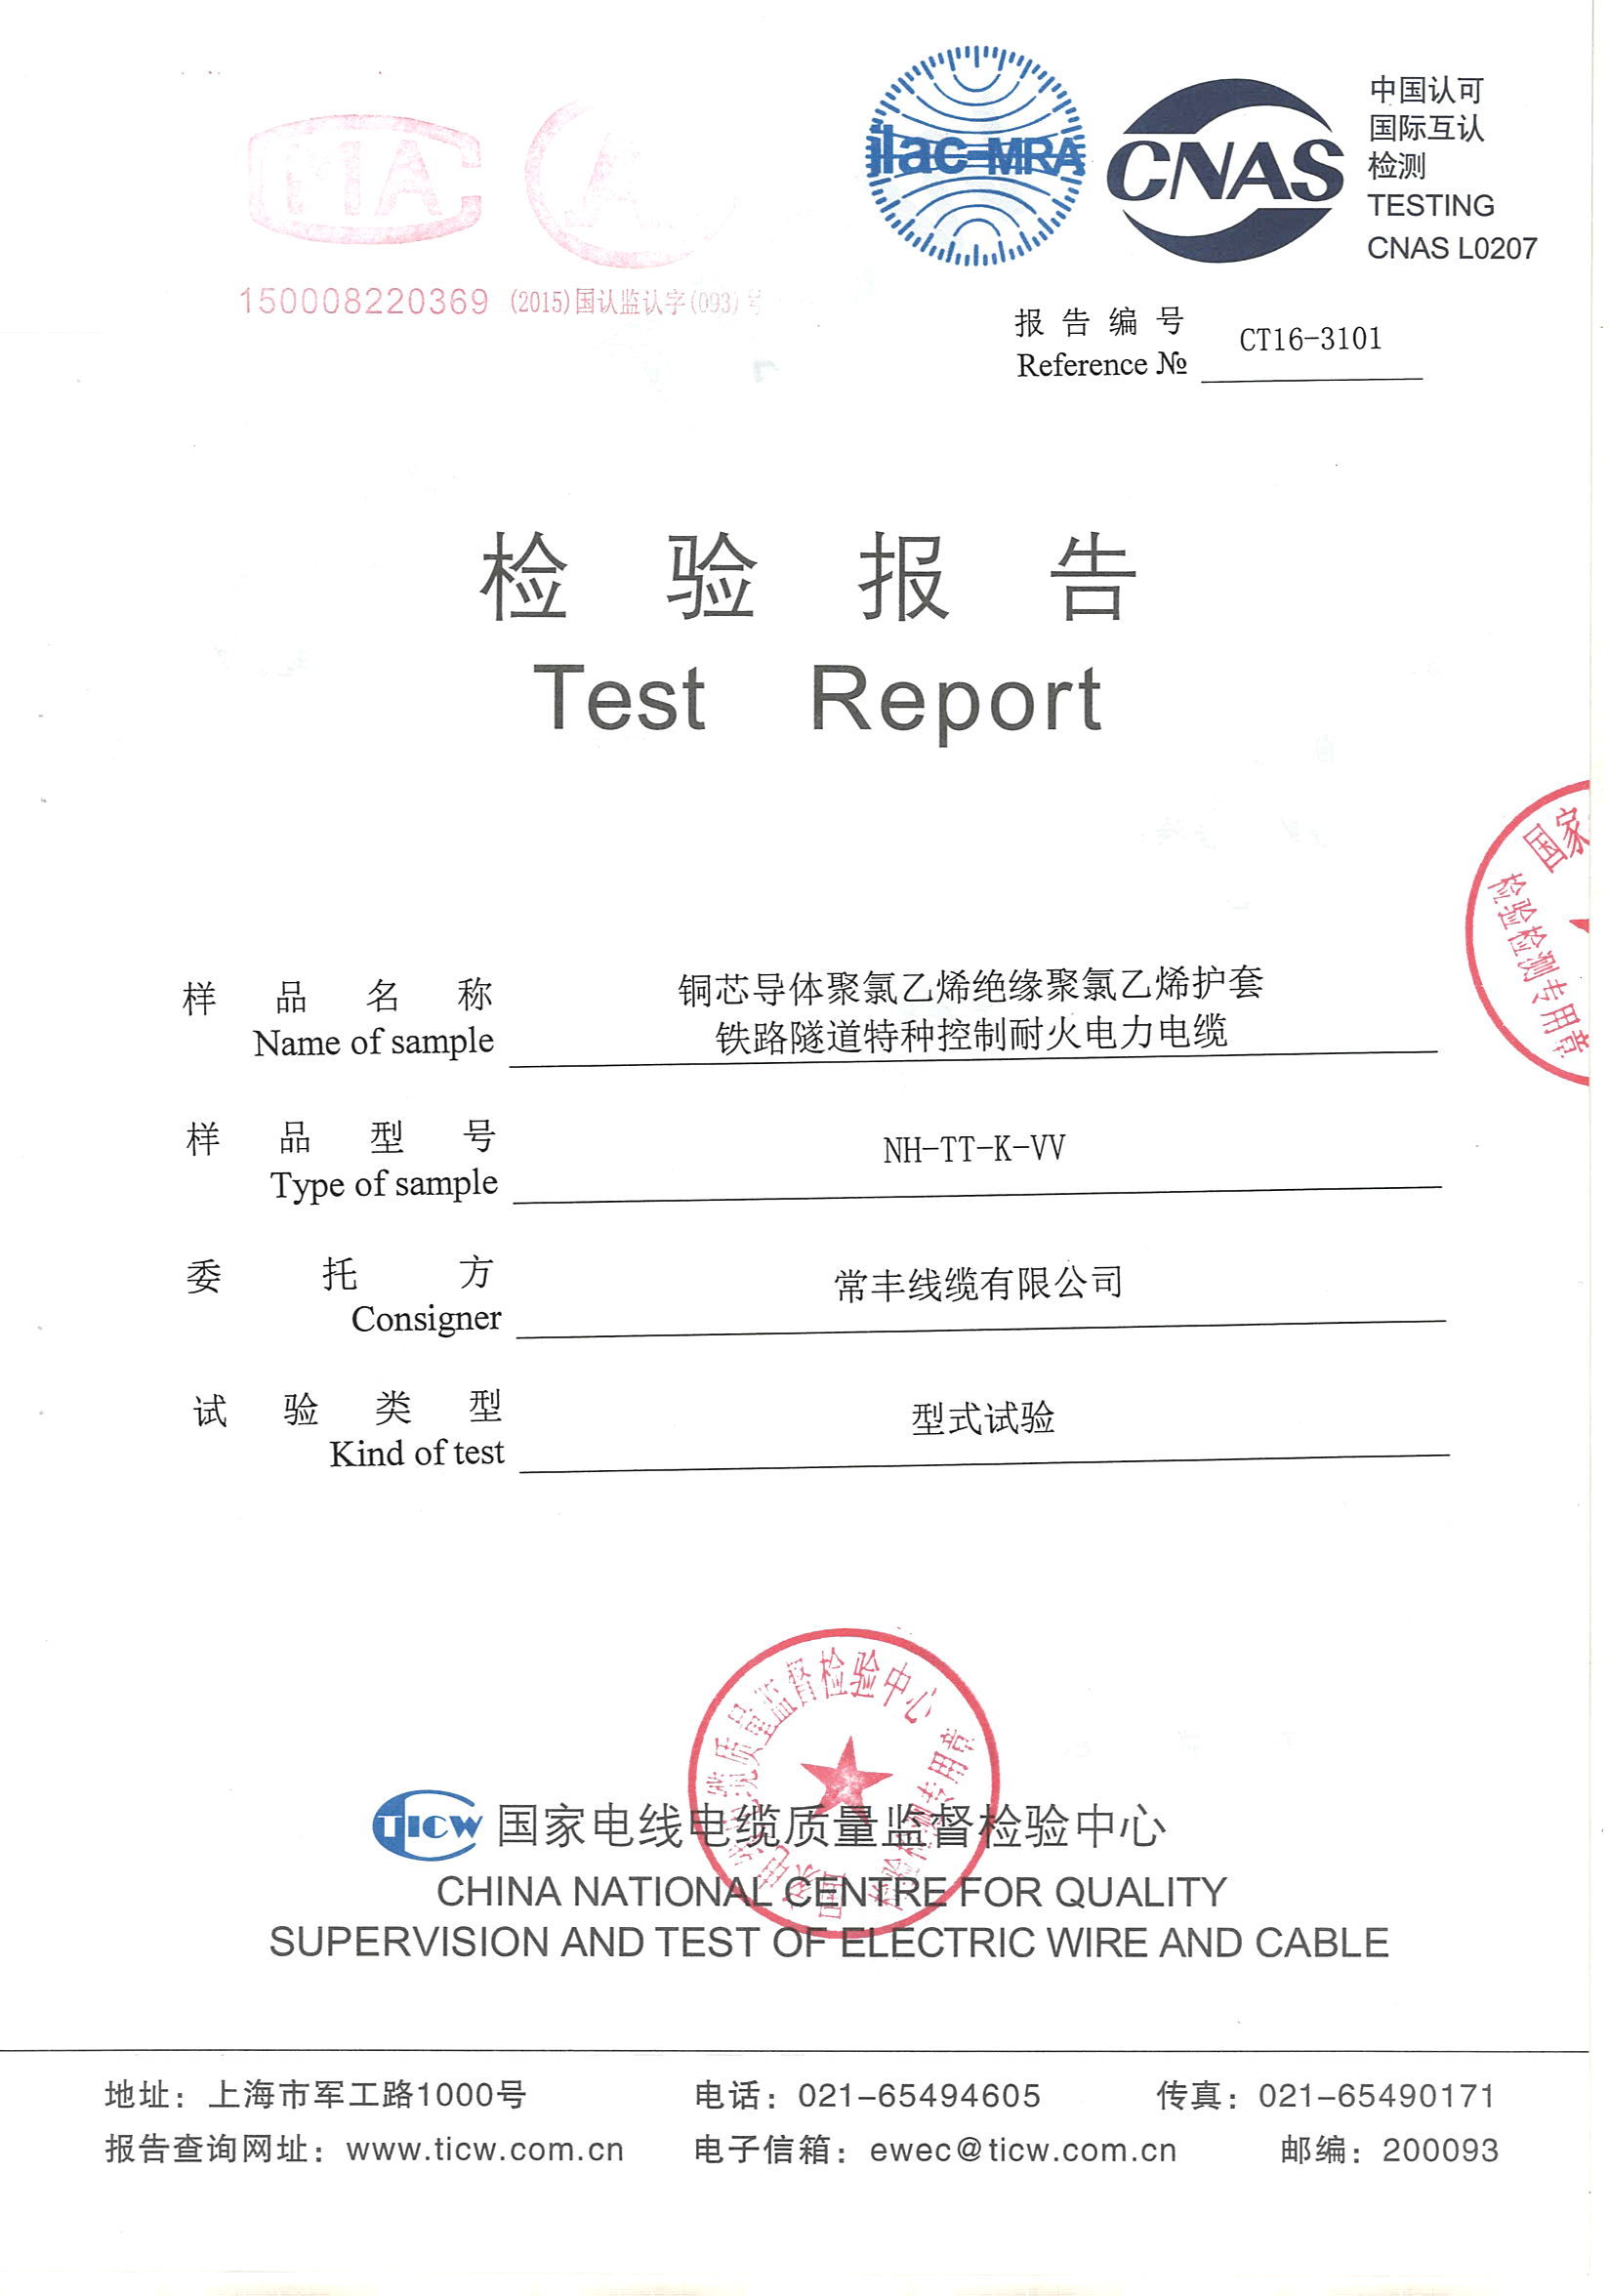 Test Report For NH-TT-K-VV 3x50sqmm+2x25sqmm+4x2.5sqmm